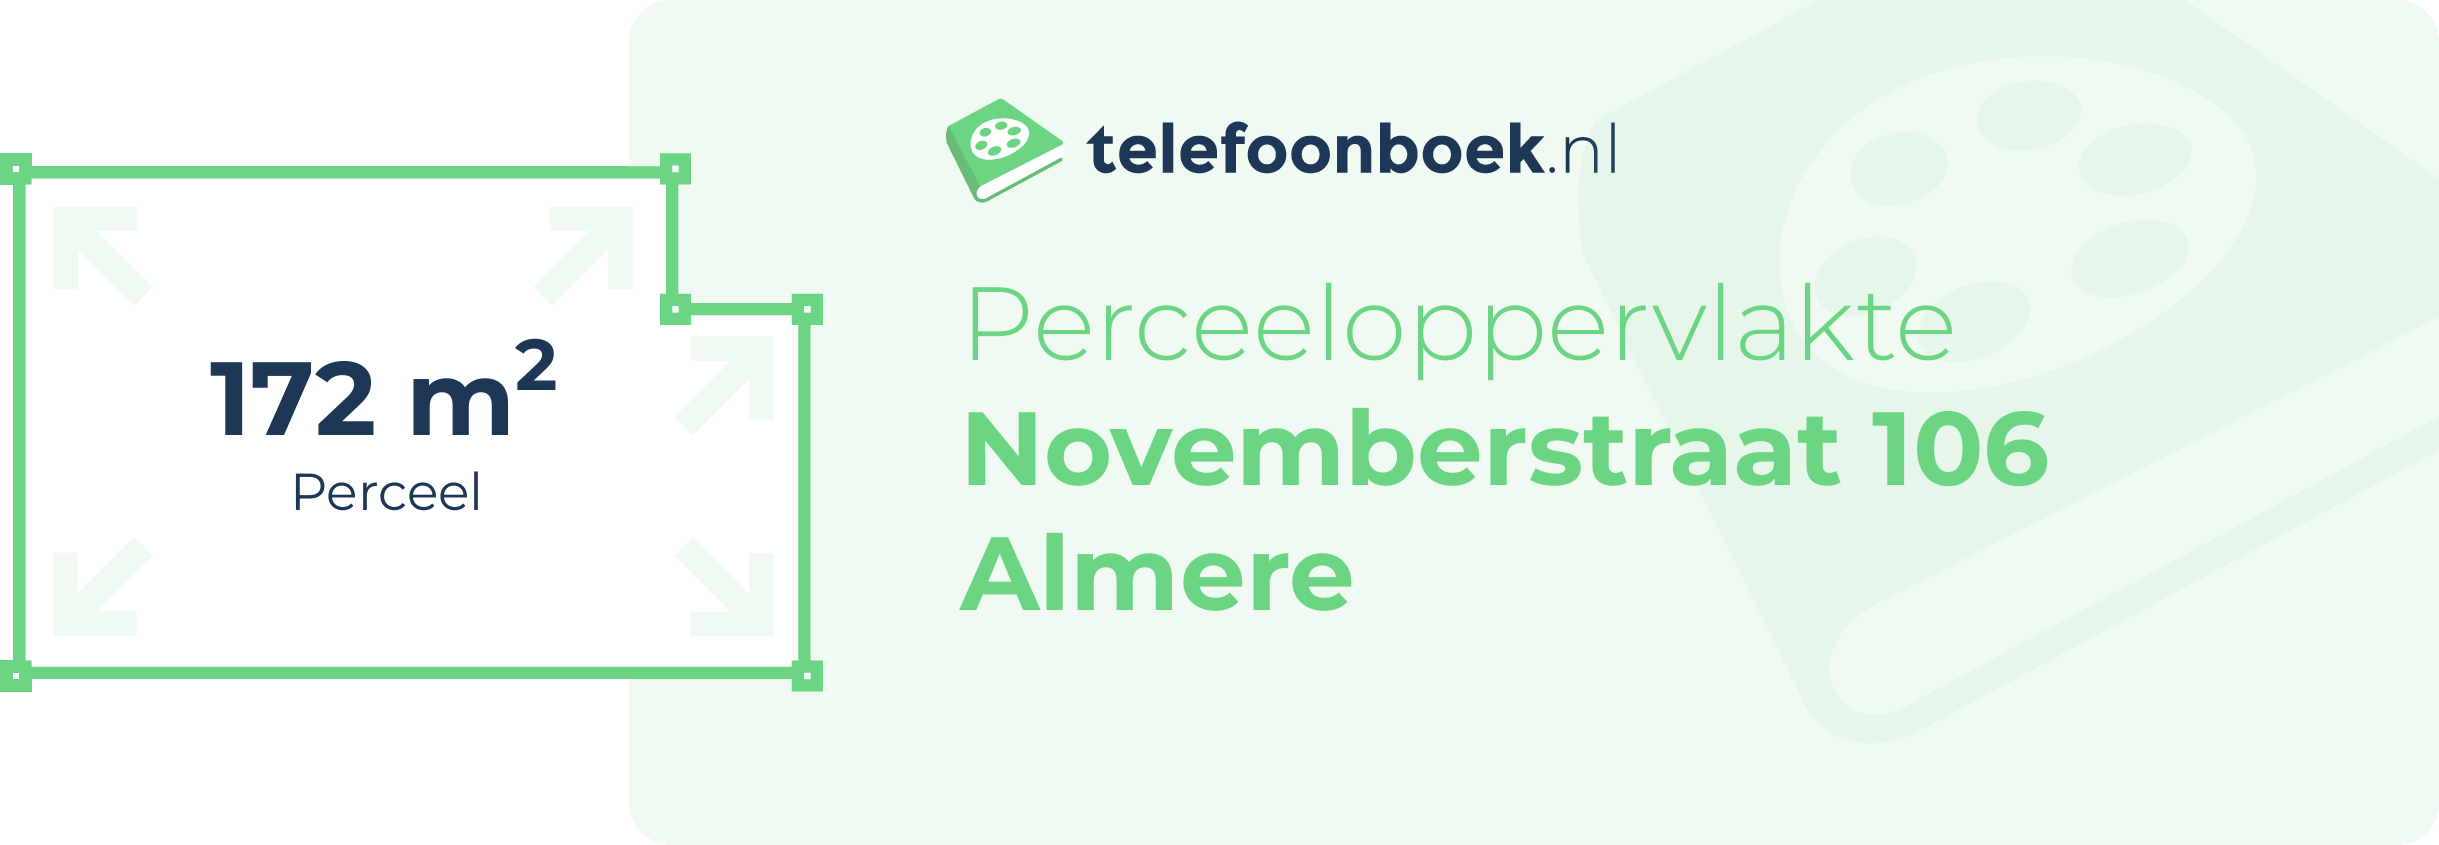 Perceeloppervlakte Novemberstraat 106 Almere